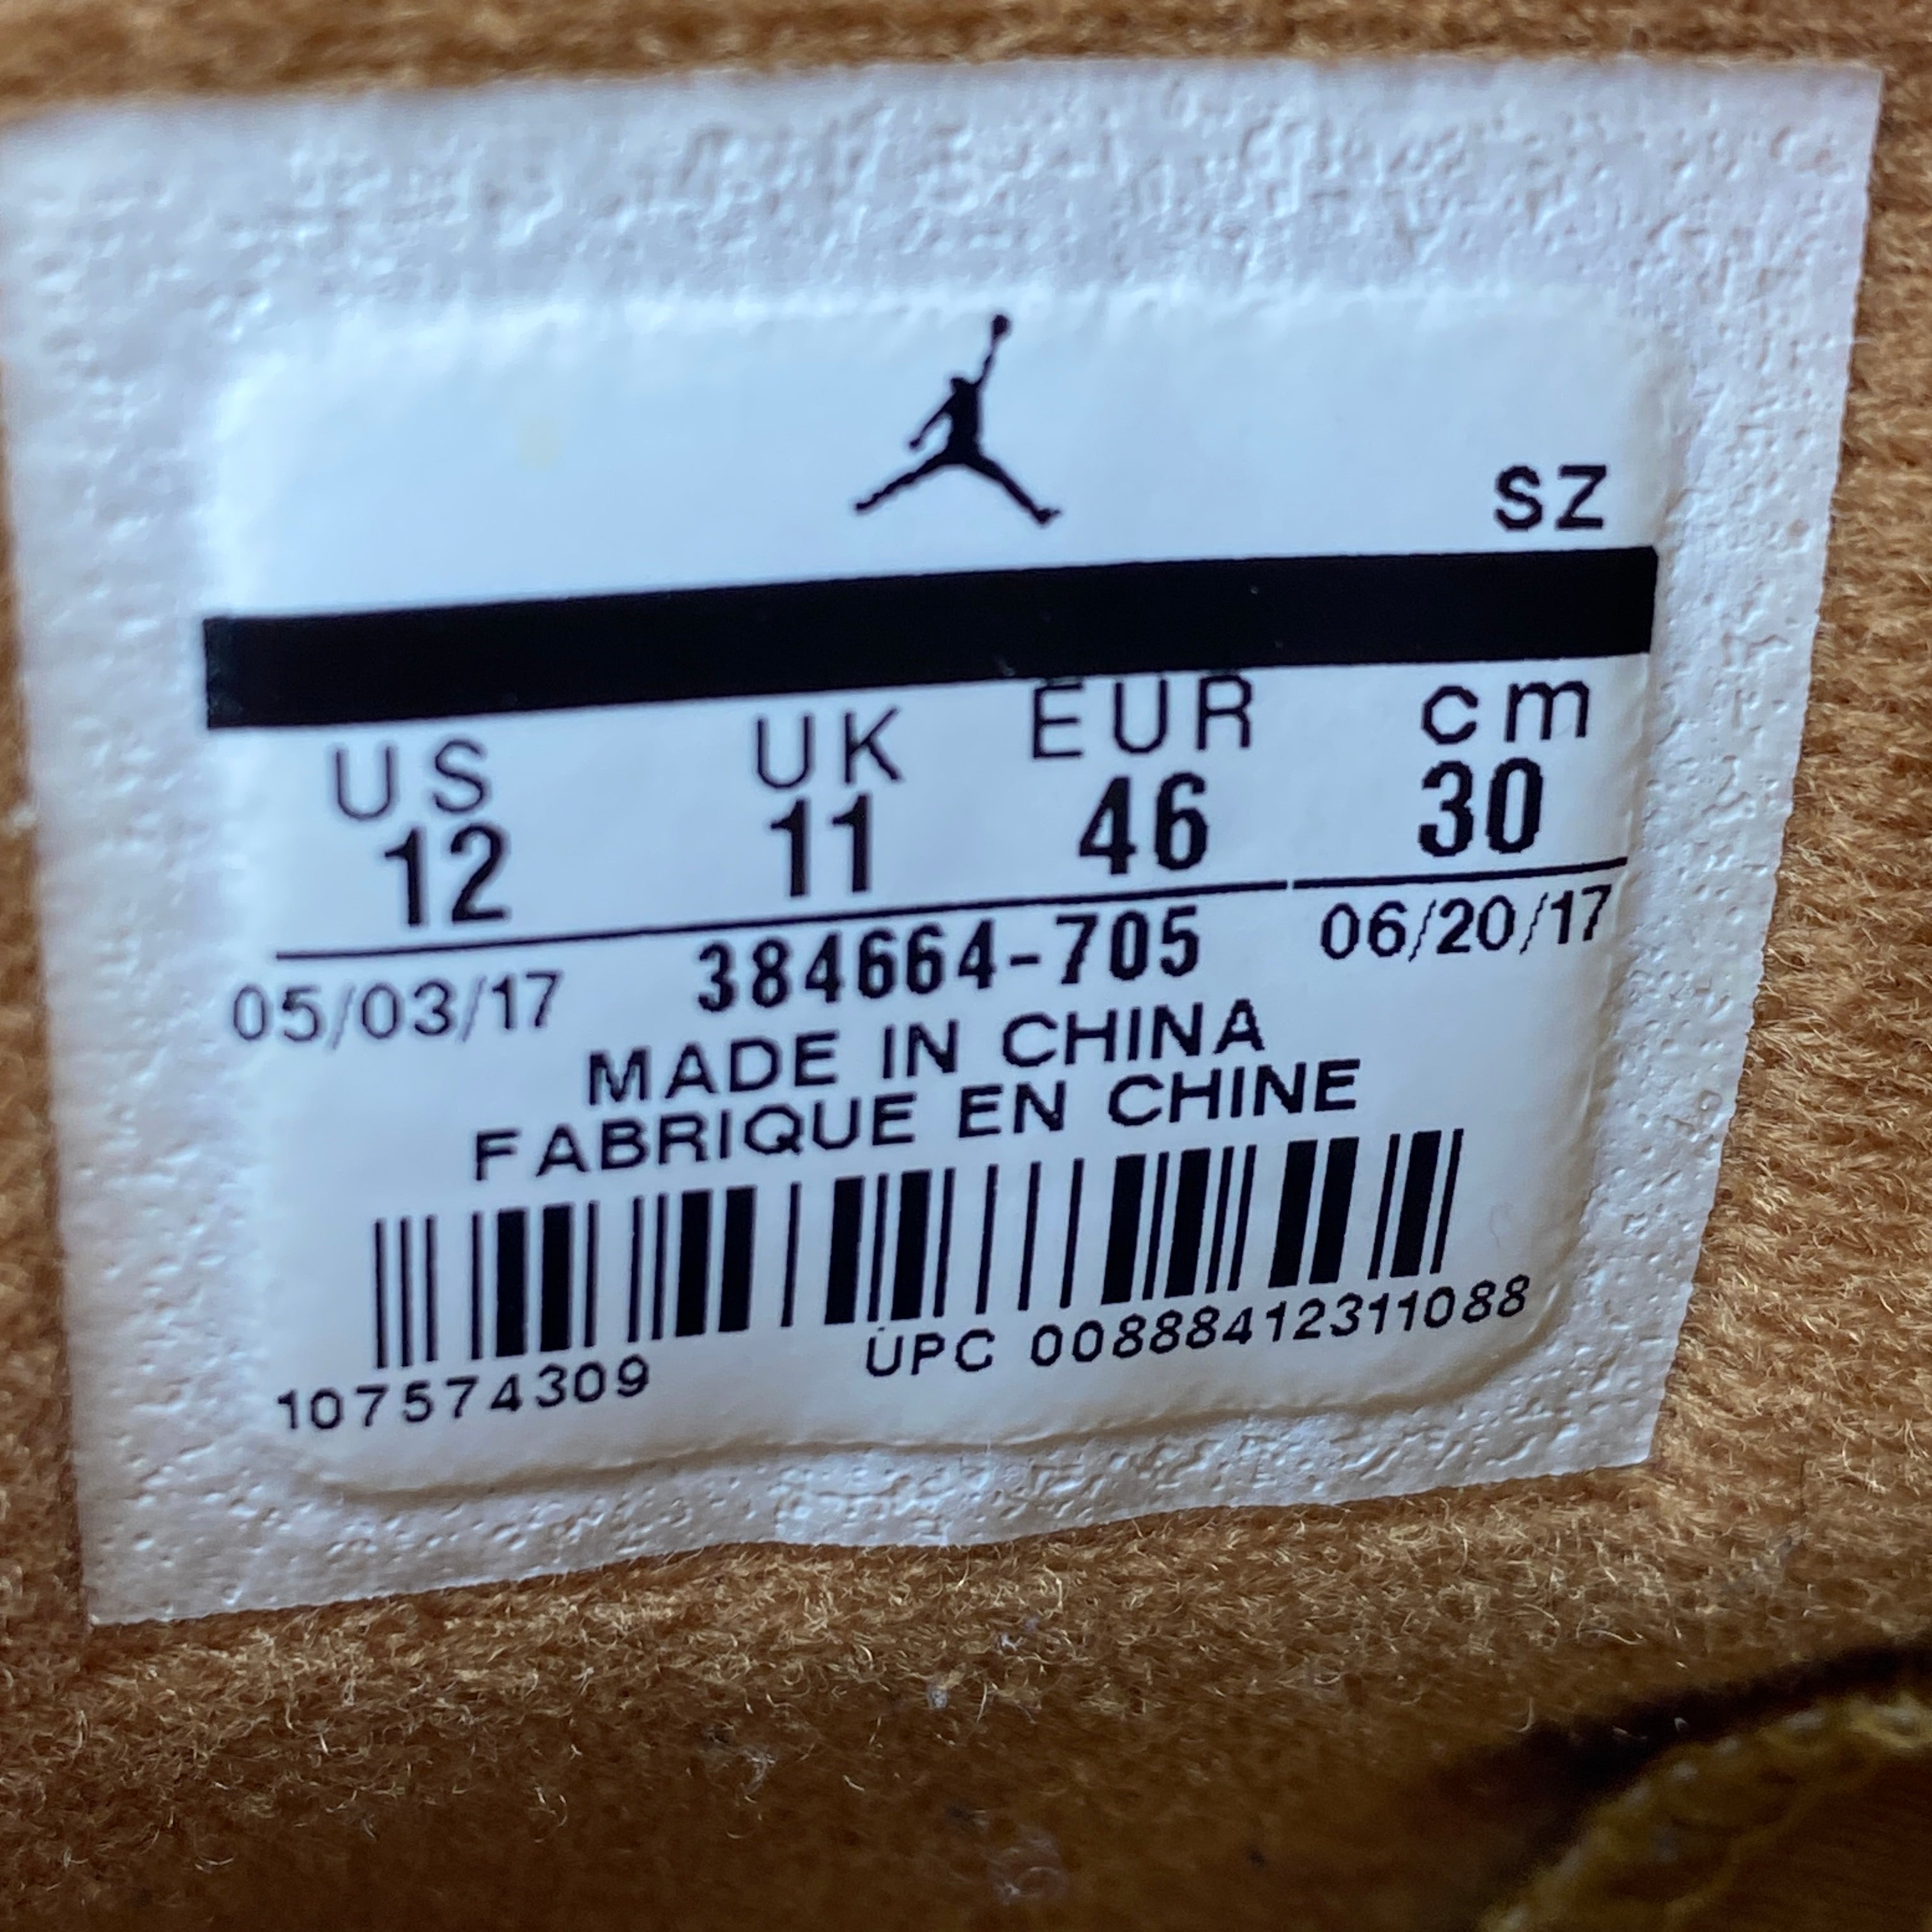 Air Jordan 6 Retro "Wheat" 2017 Used Size 12